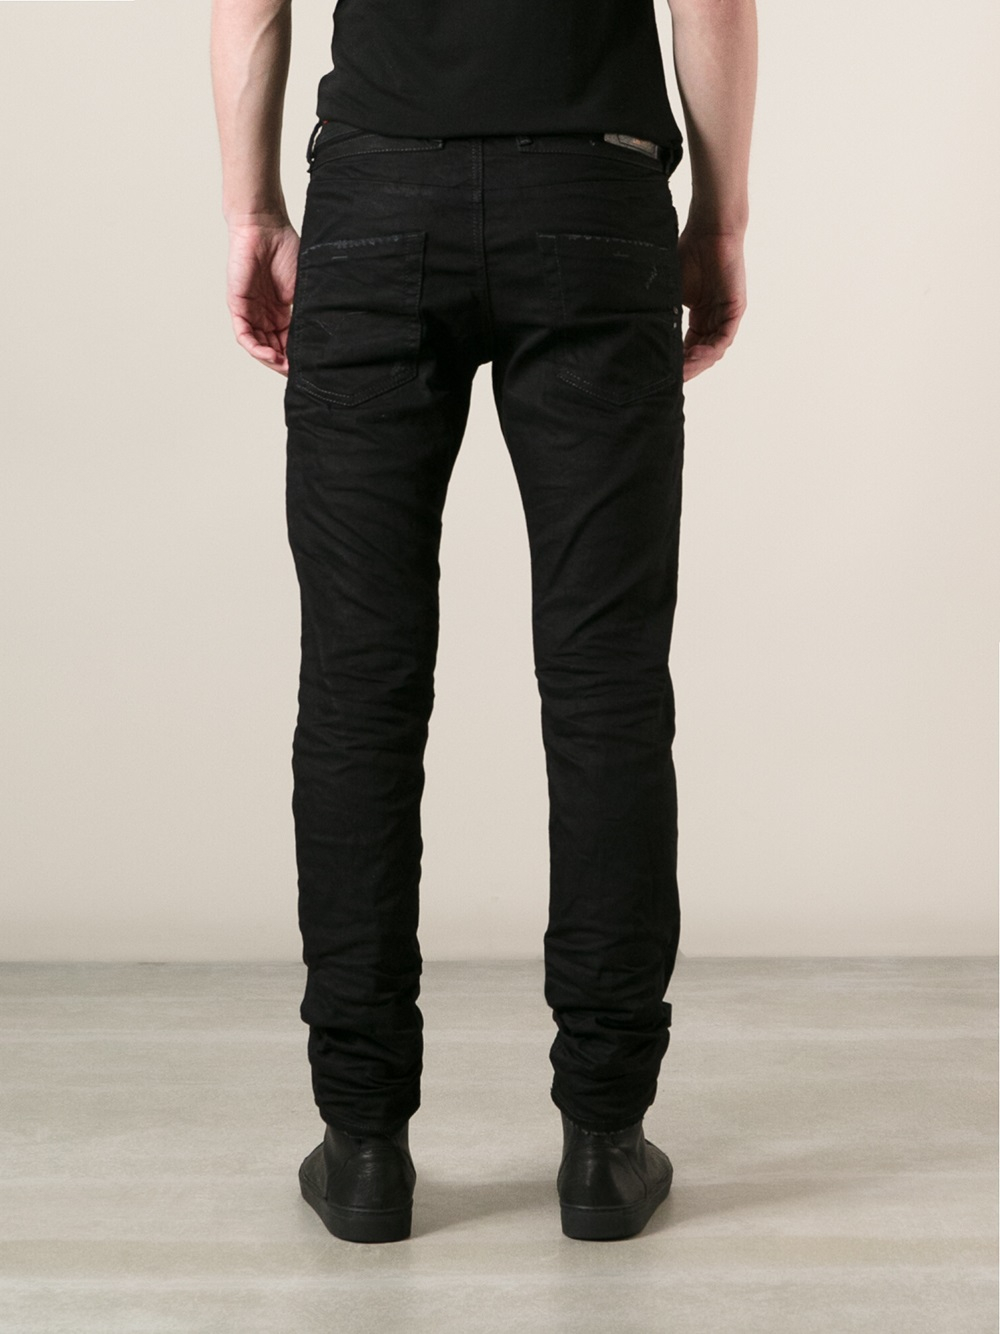 Lyst - Diesel Belther Jean in Black for Men